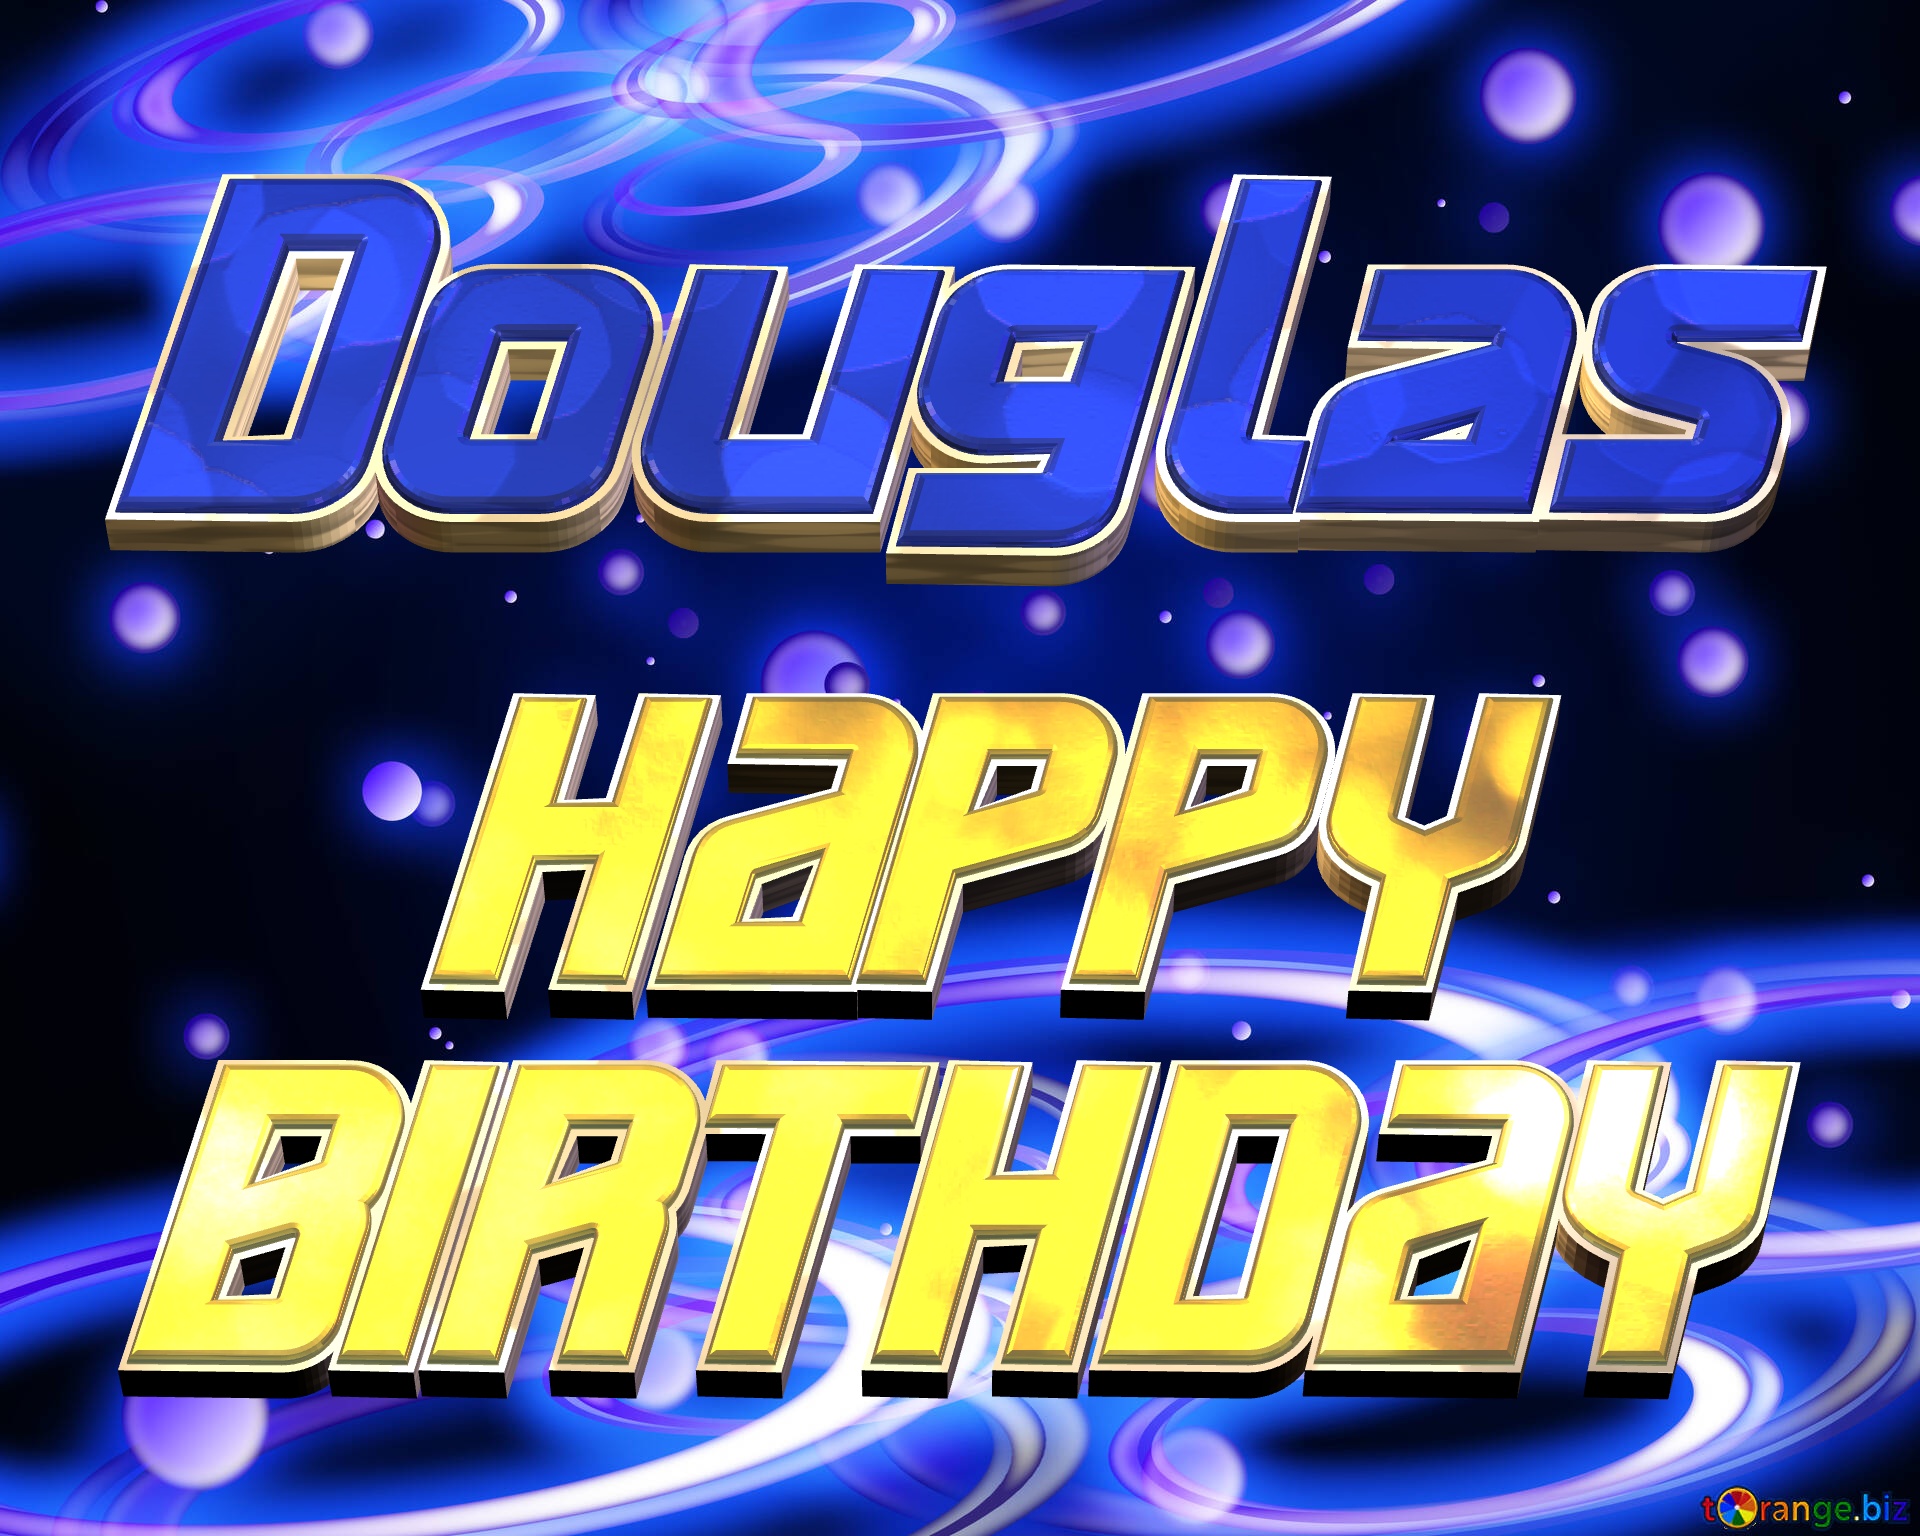 Douglas Space Happy Birthday! Technology background №54919